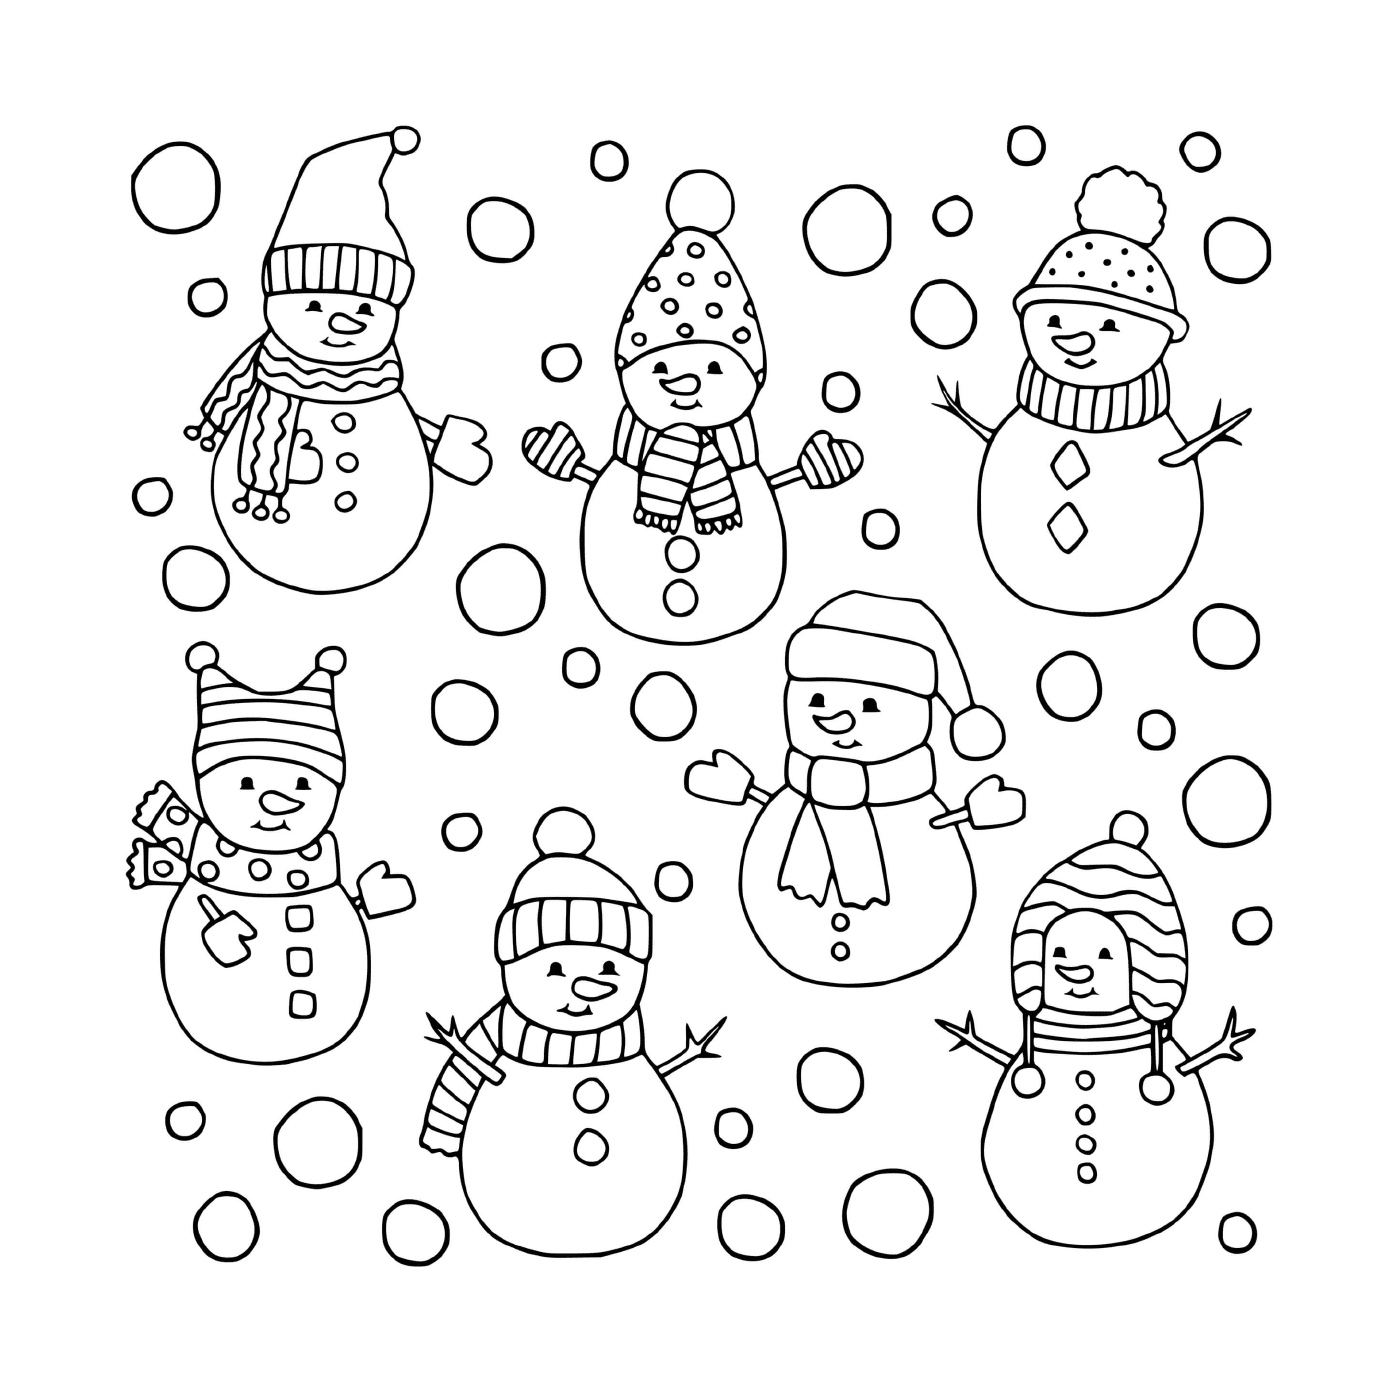  Several different snowmen 